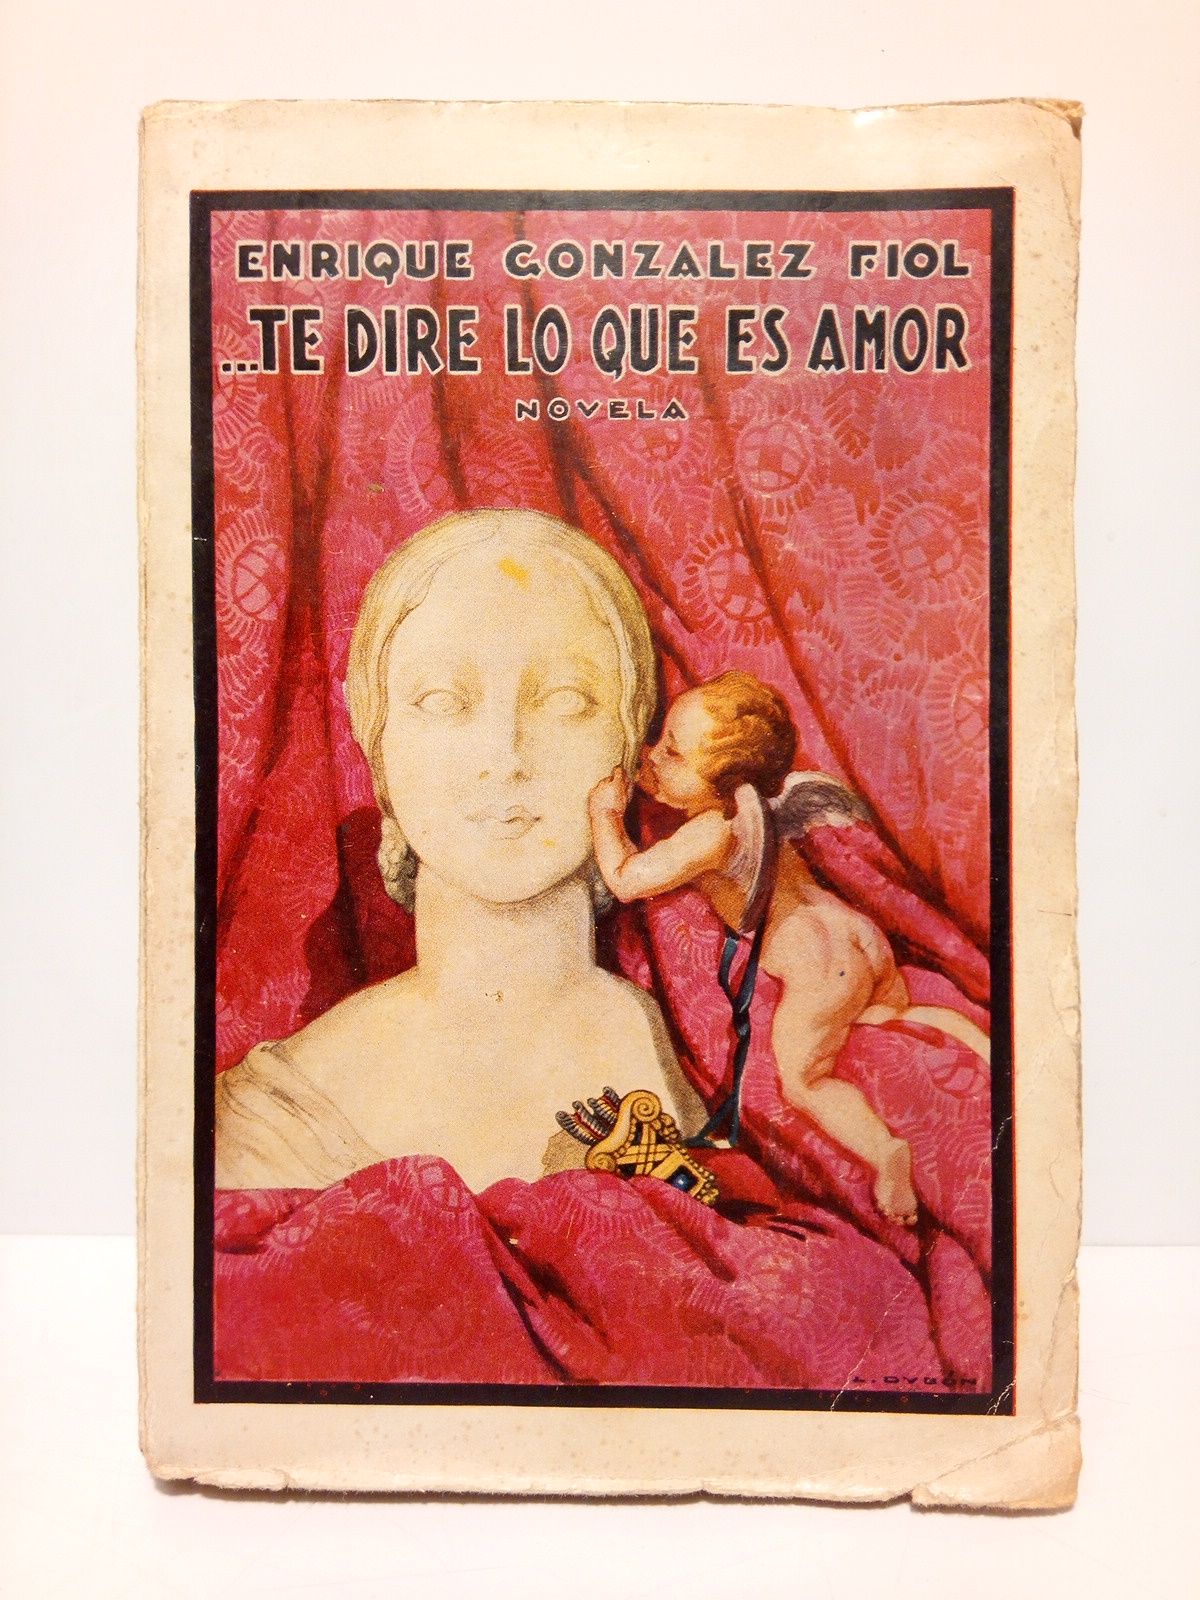 GONZALEZ FIOL, Enrique - ...Te dir lo que es amor (Novela) /  Portada e ilustraciones de Luis Dubon